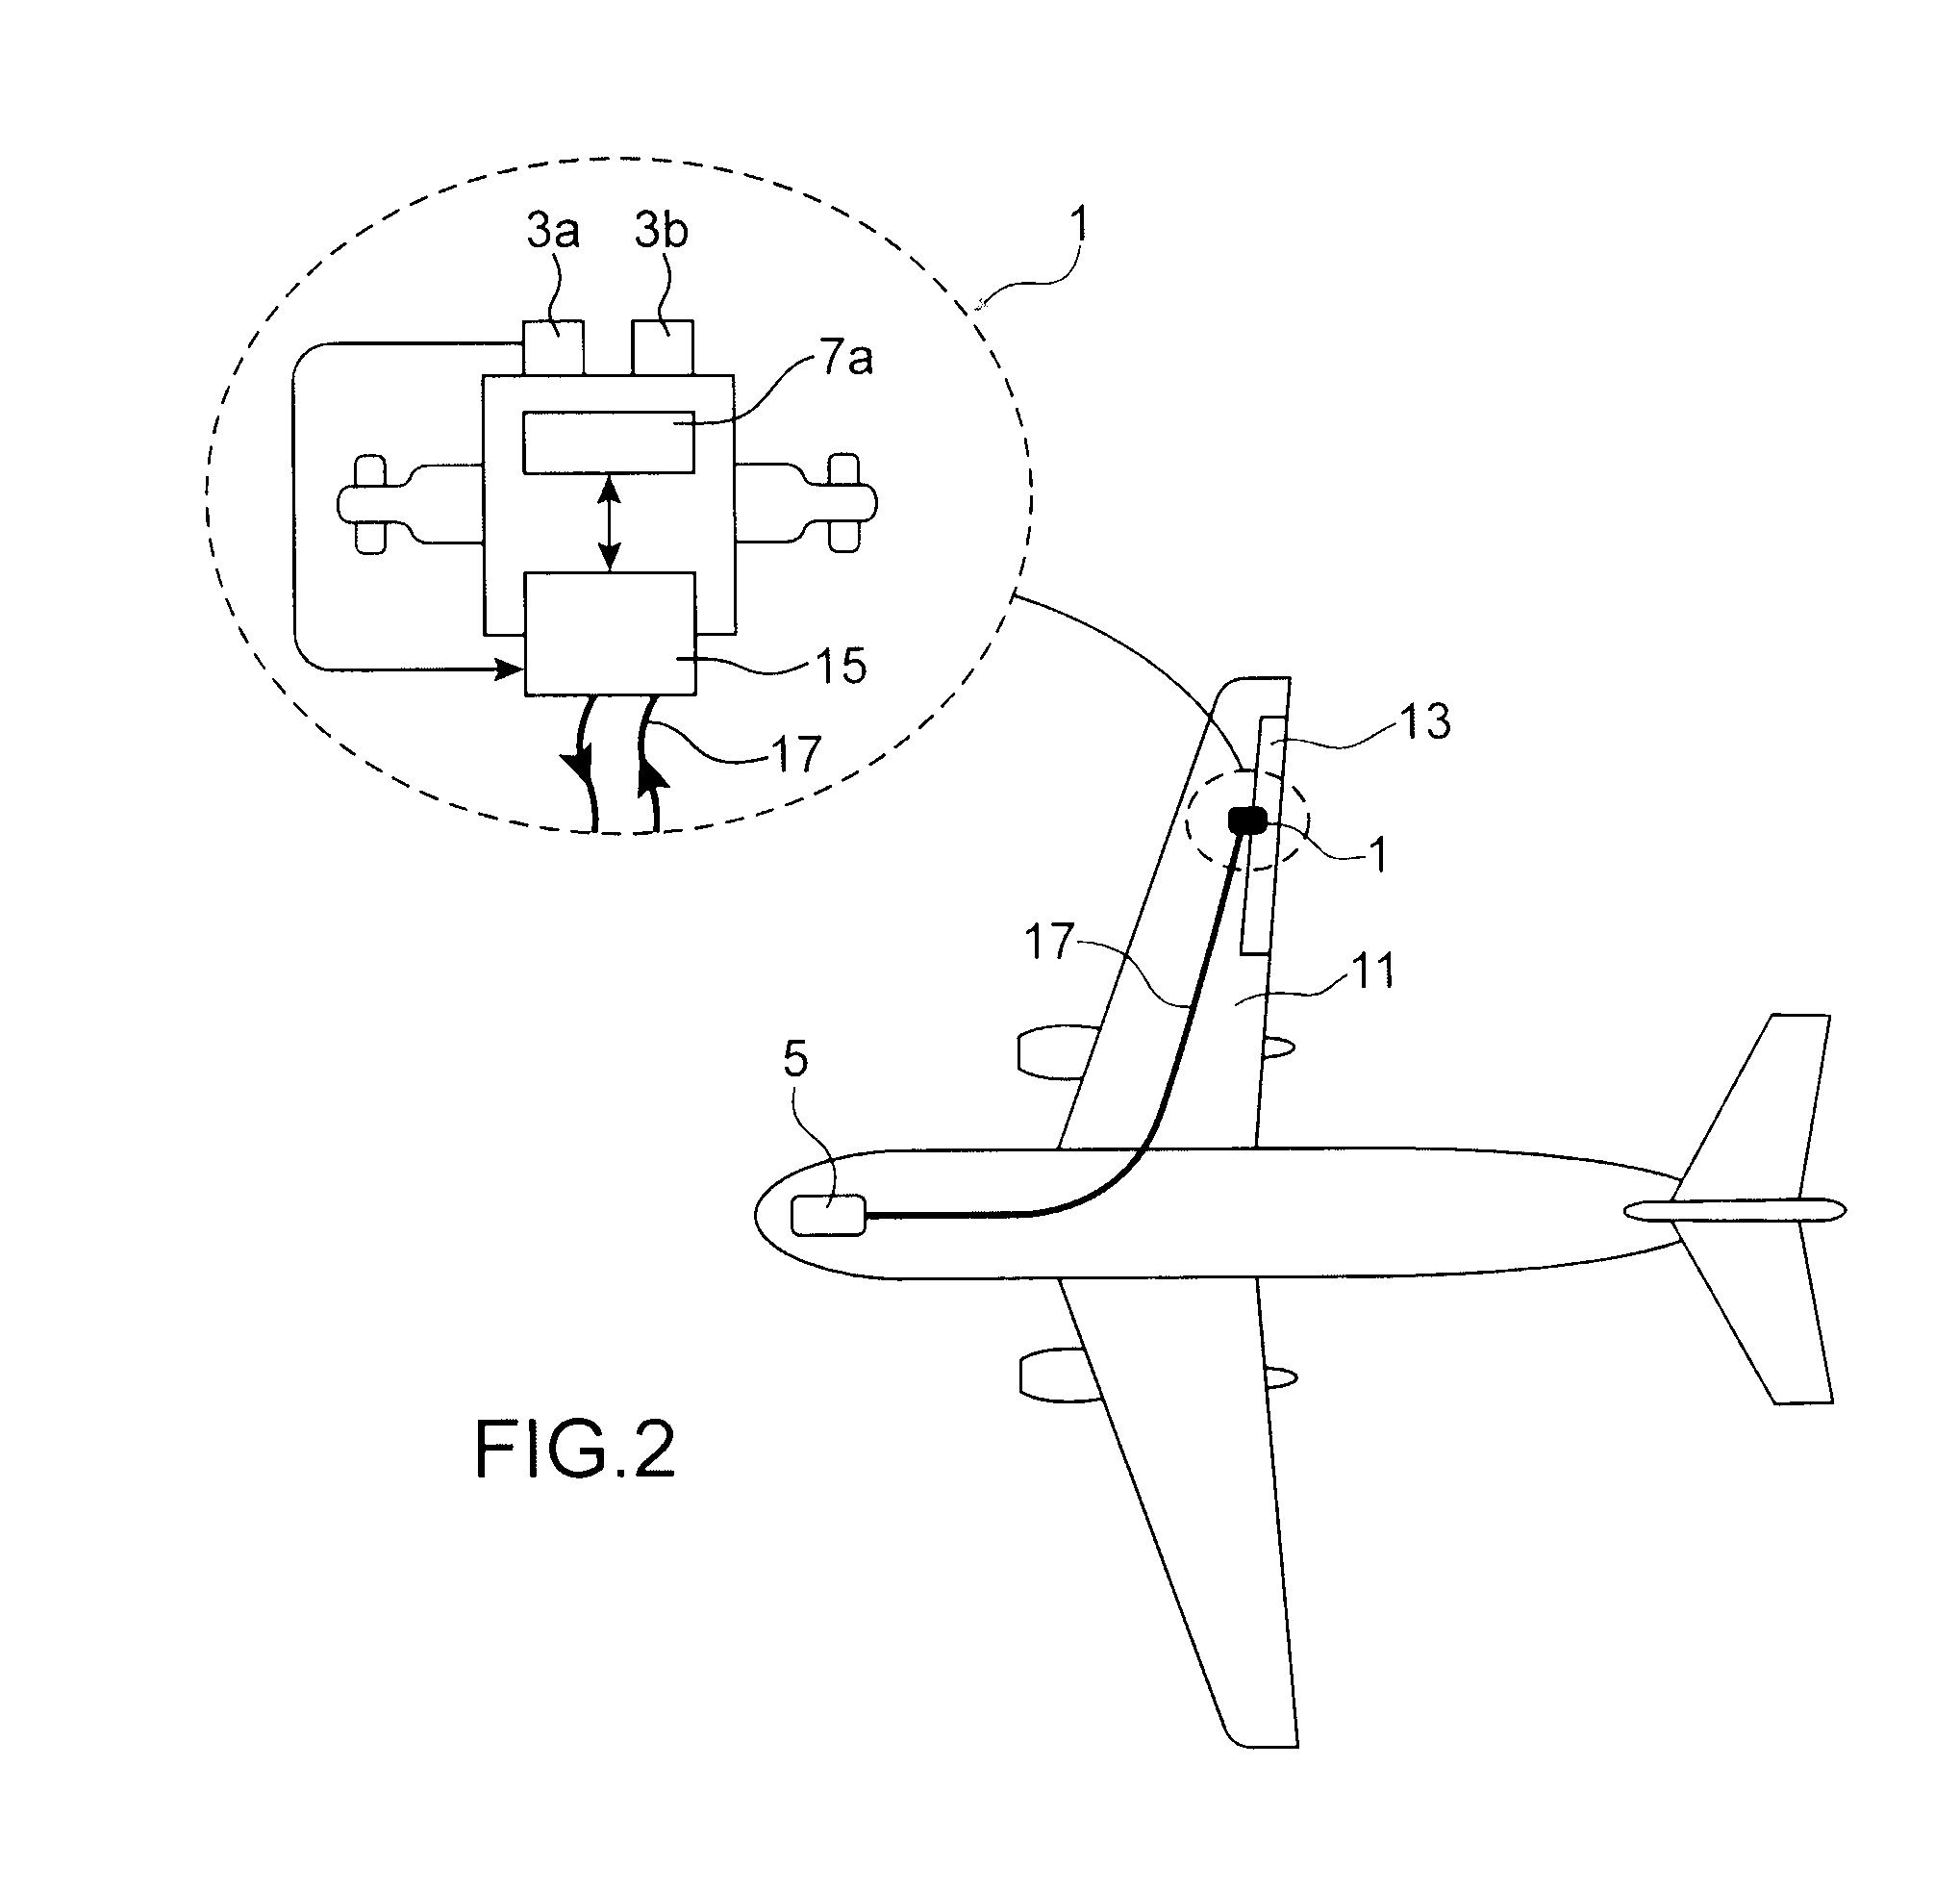 Monitoring of a flight control actuator of an aircraft